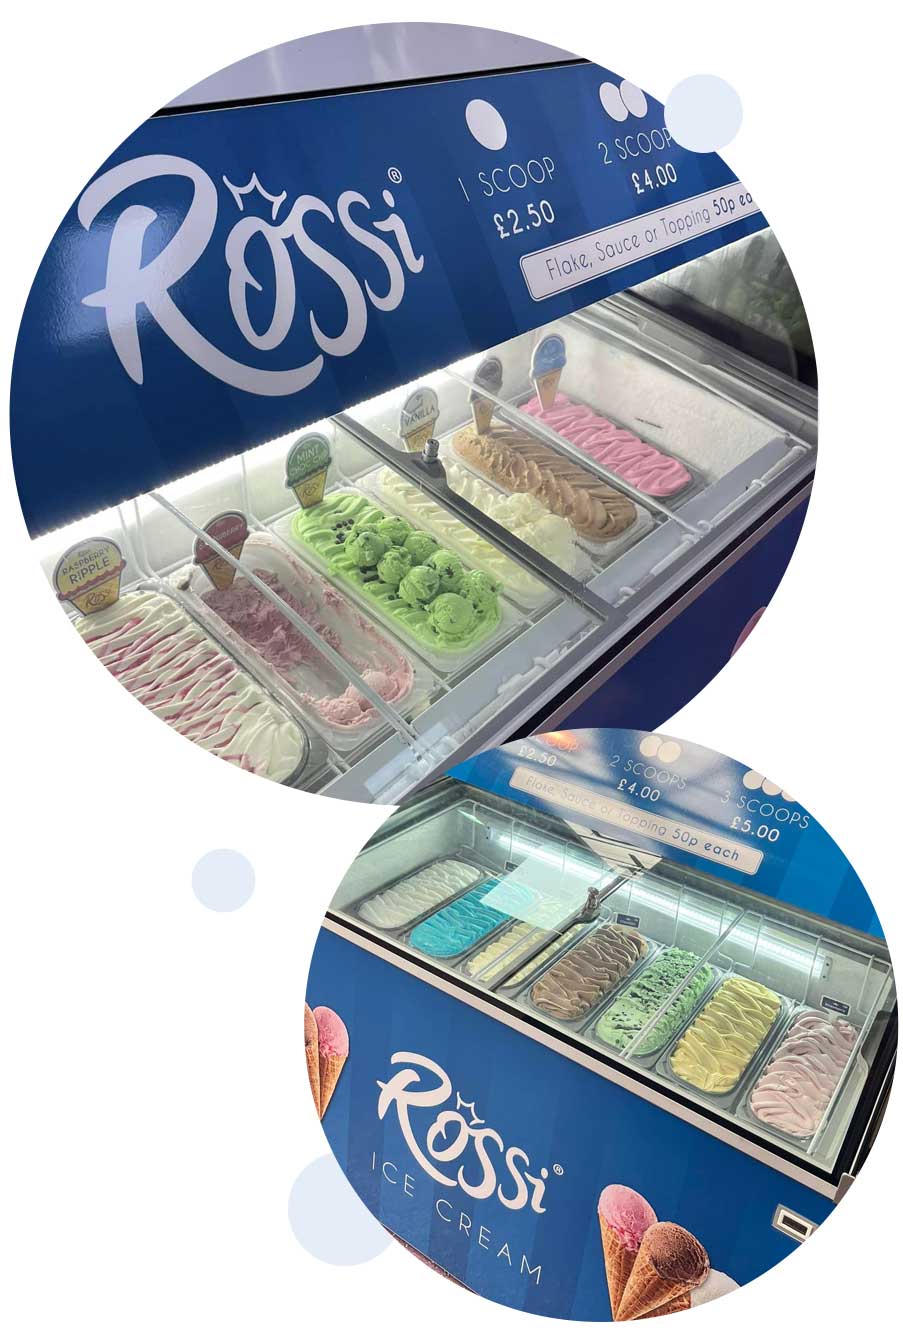 Maximize Sales with Rossi Ice Cream